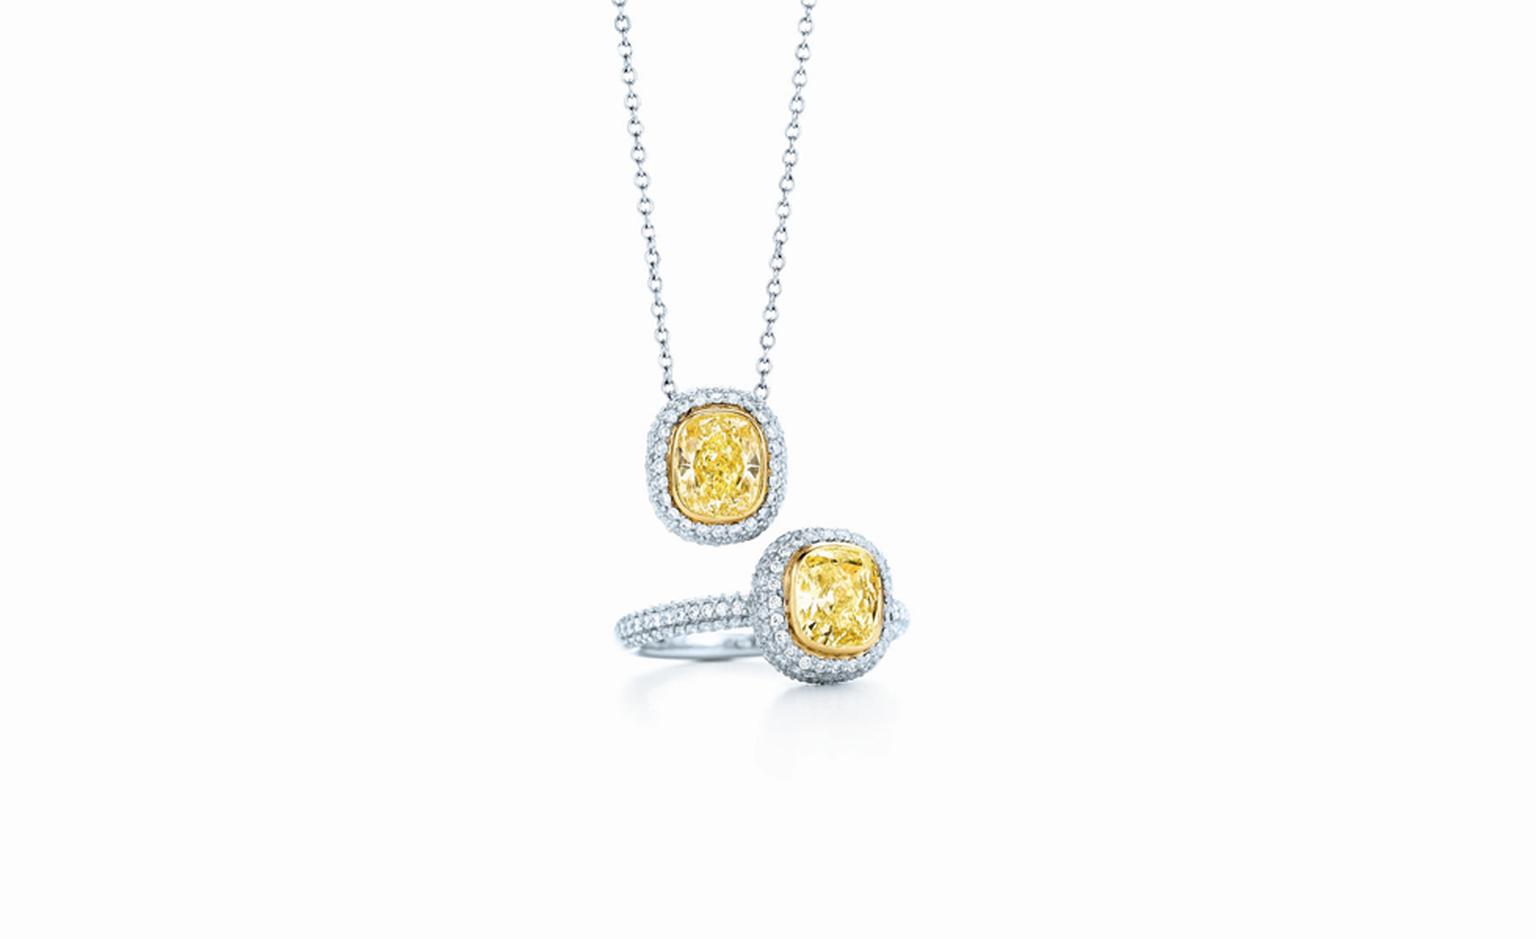 Tiffany & Co, yellow diamond and pendant ring £14,800, £17,500